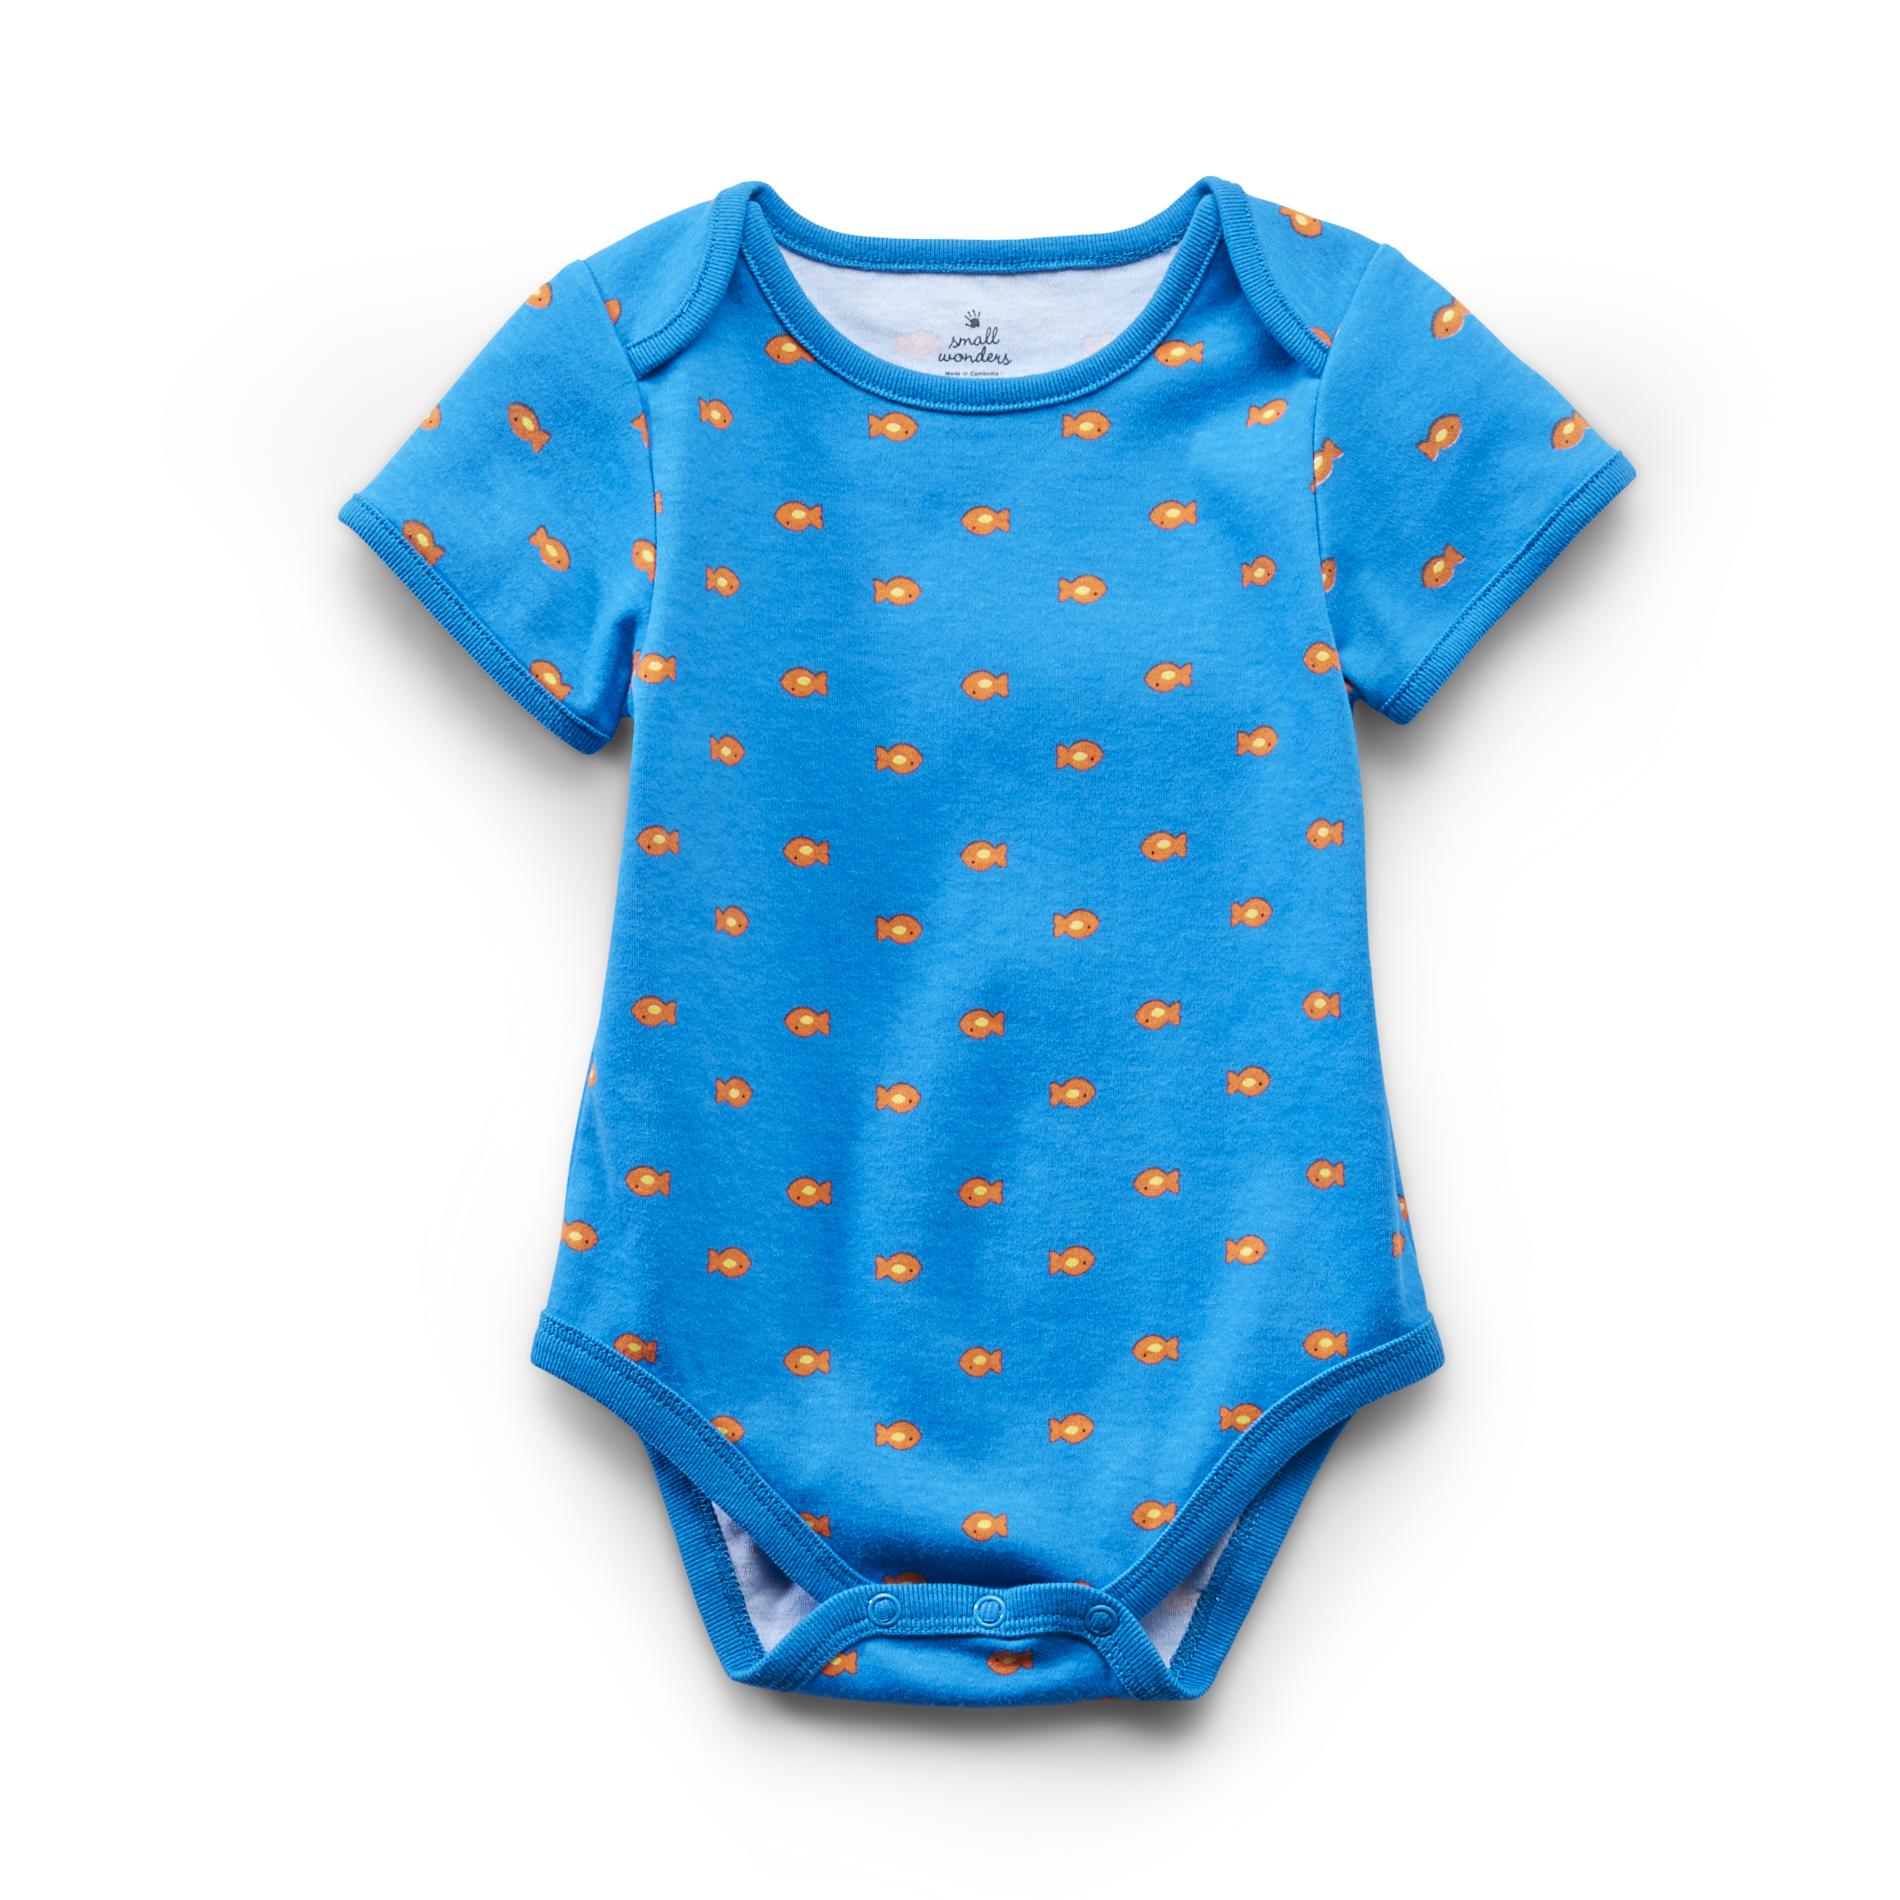 Small Wonders Newborn Boy's Short-Sleeve Bodysuit - Goldfish